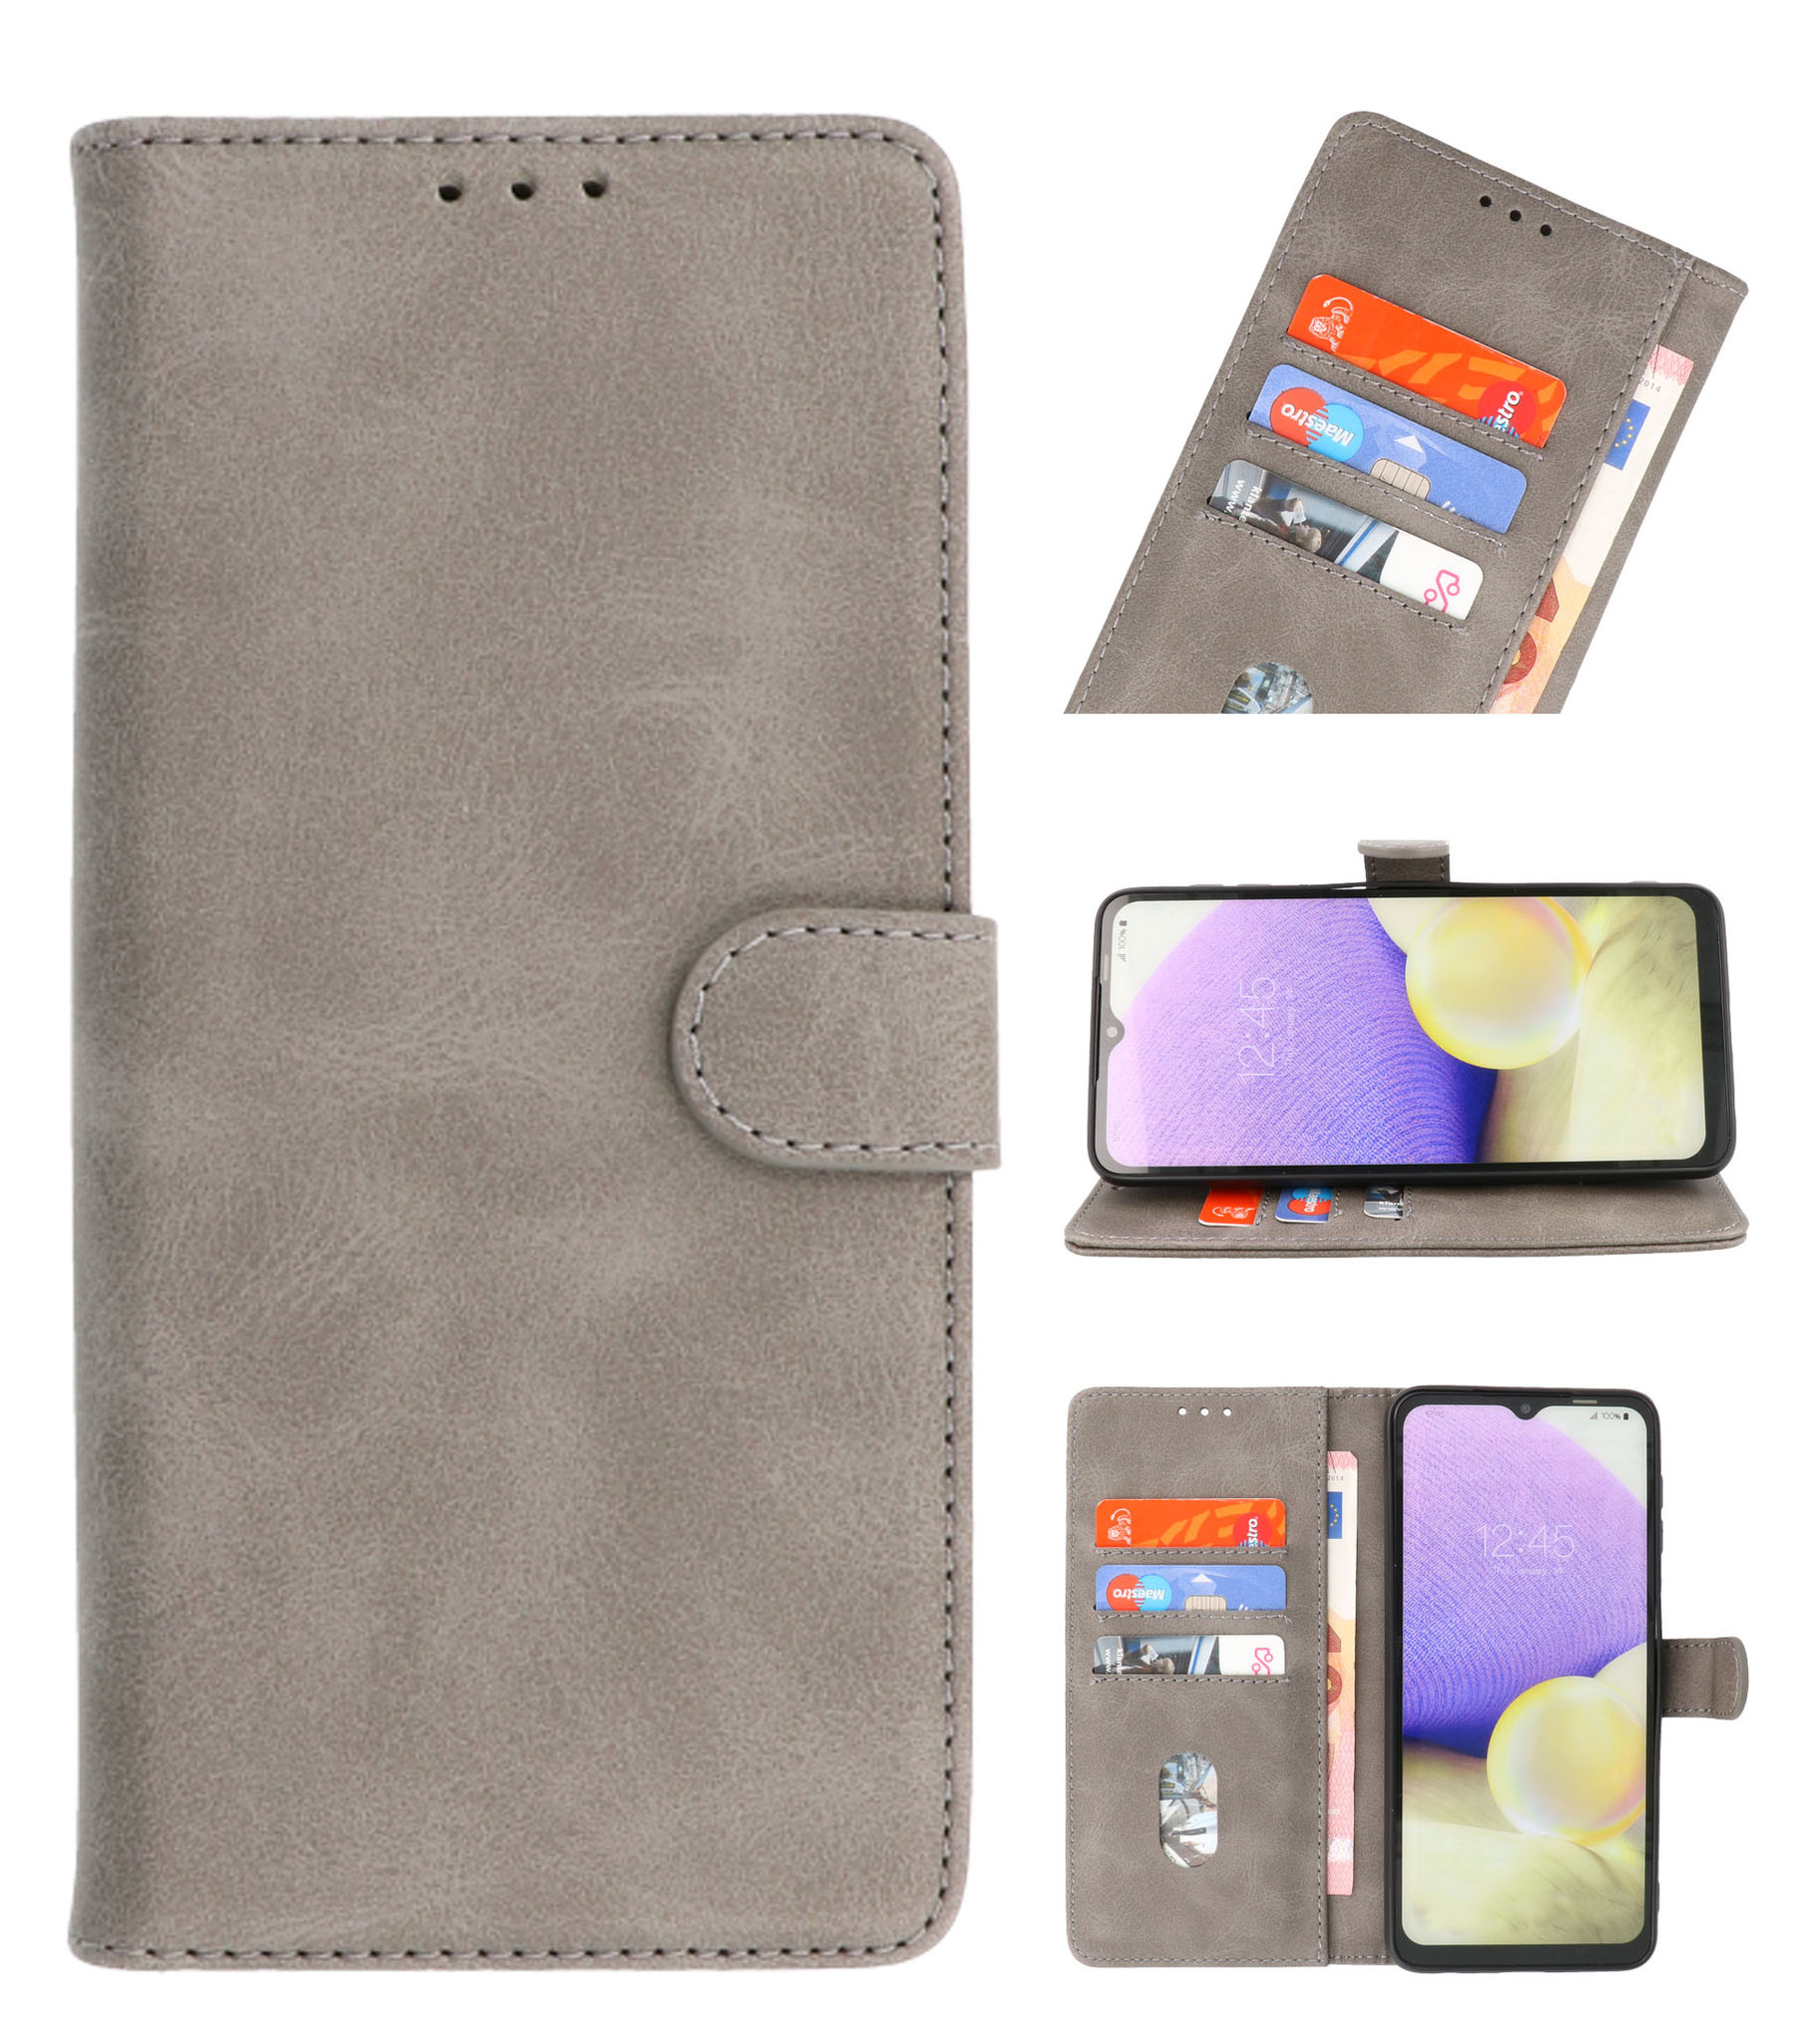 Funda Estuche Bookstyle Wallet para Samsung Galaxy A11 Gris